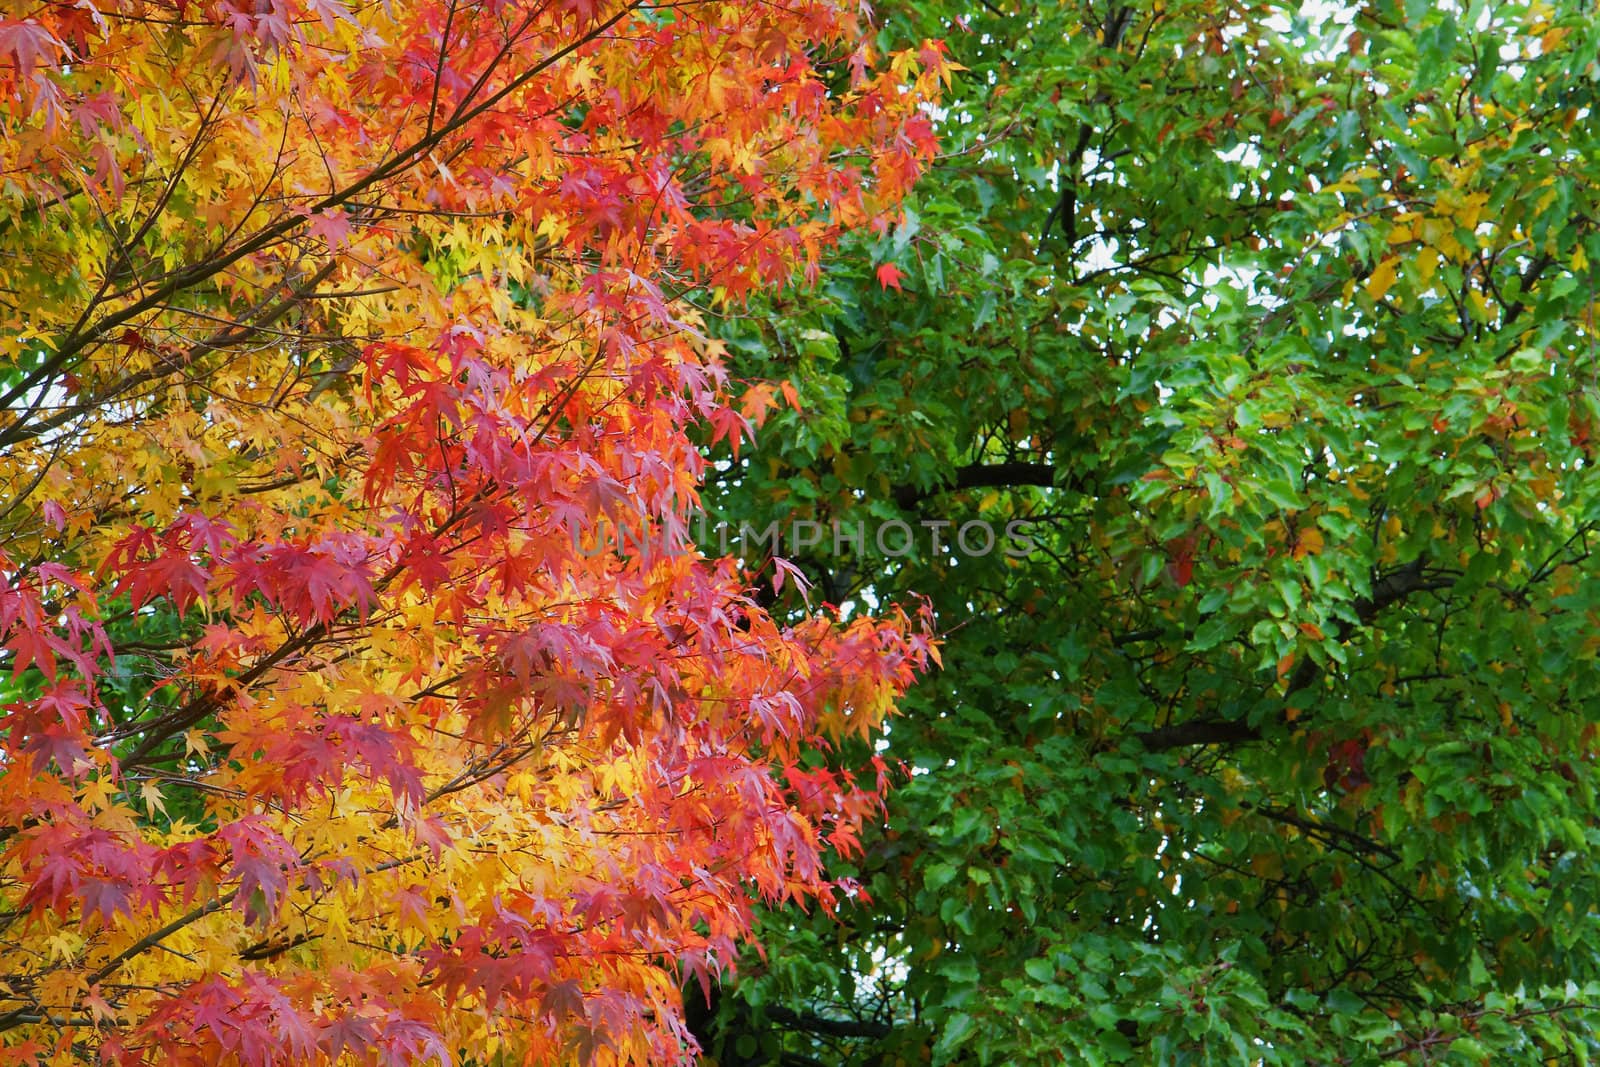 Fall leaves againast green leaves by bobkeenan